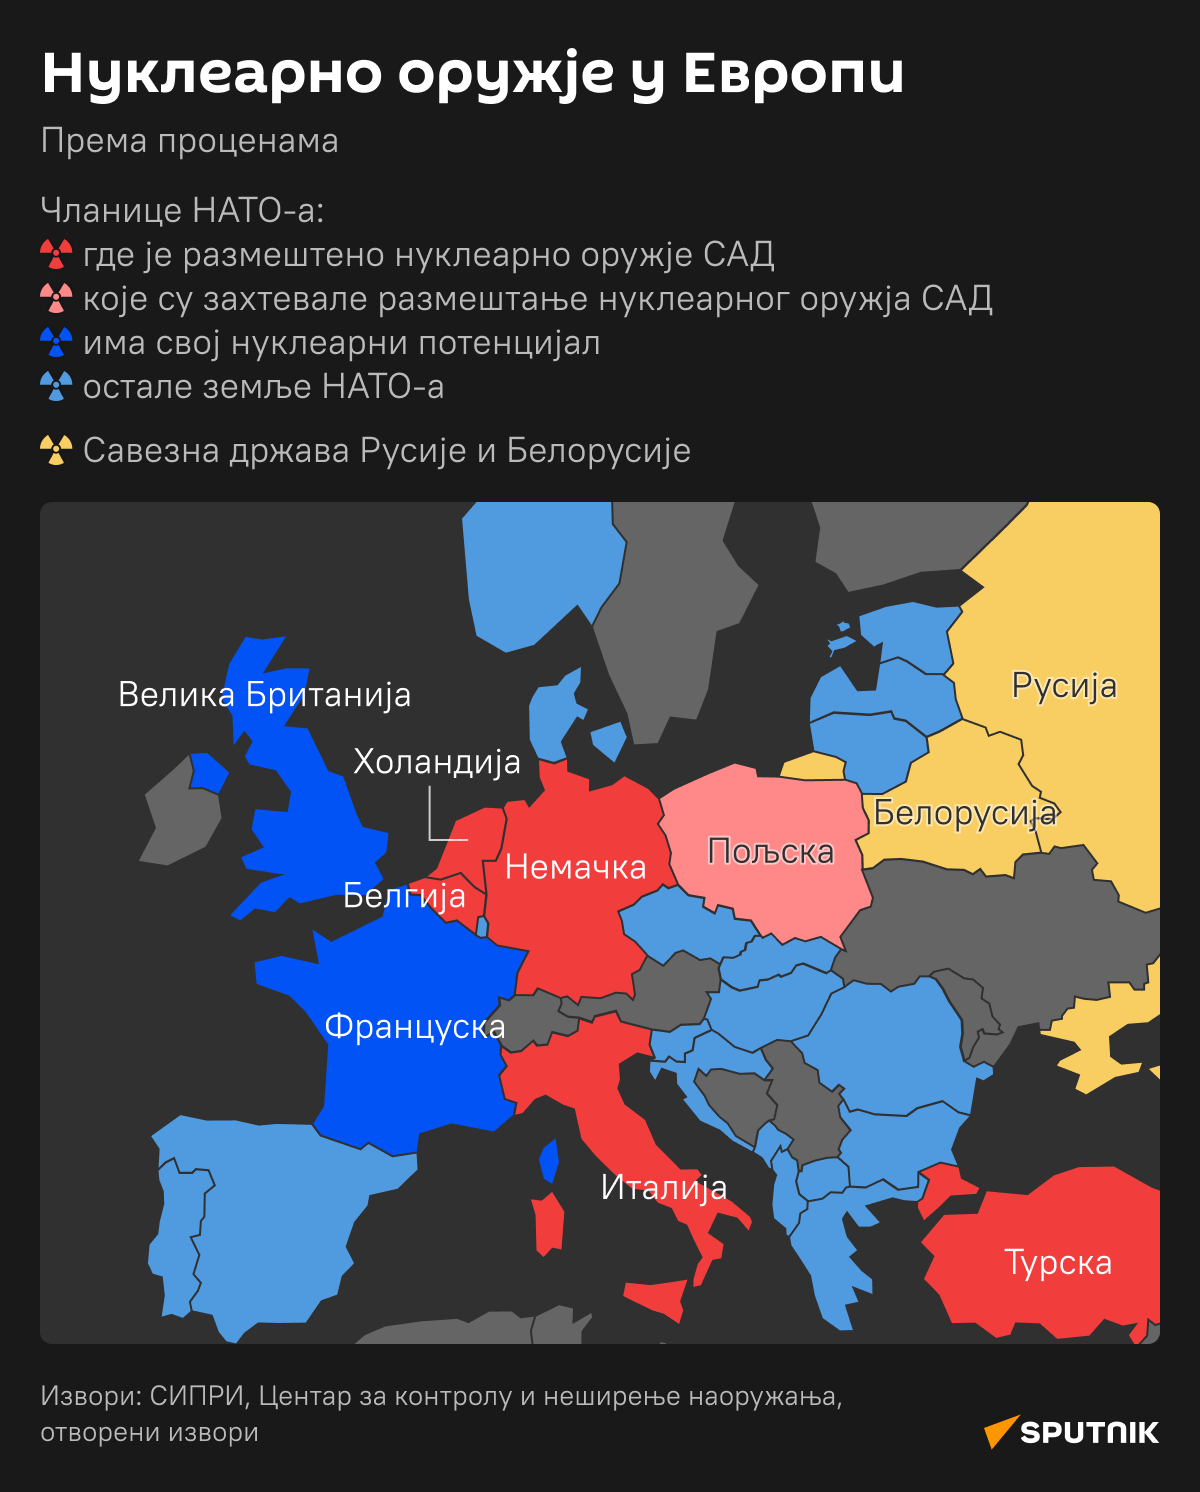 Инфографика Нуклеарно оружје у Европи  Ћирилица деск - Sputnik Србија